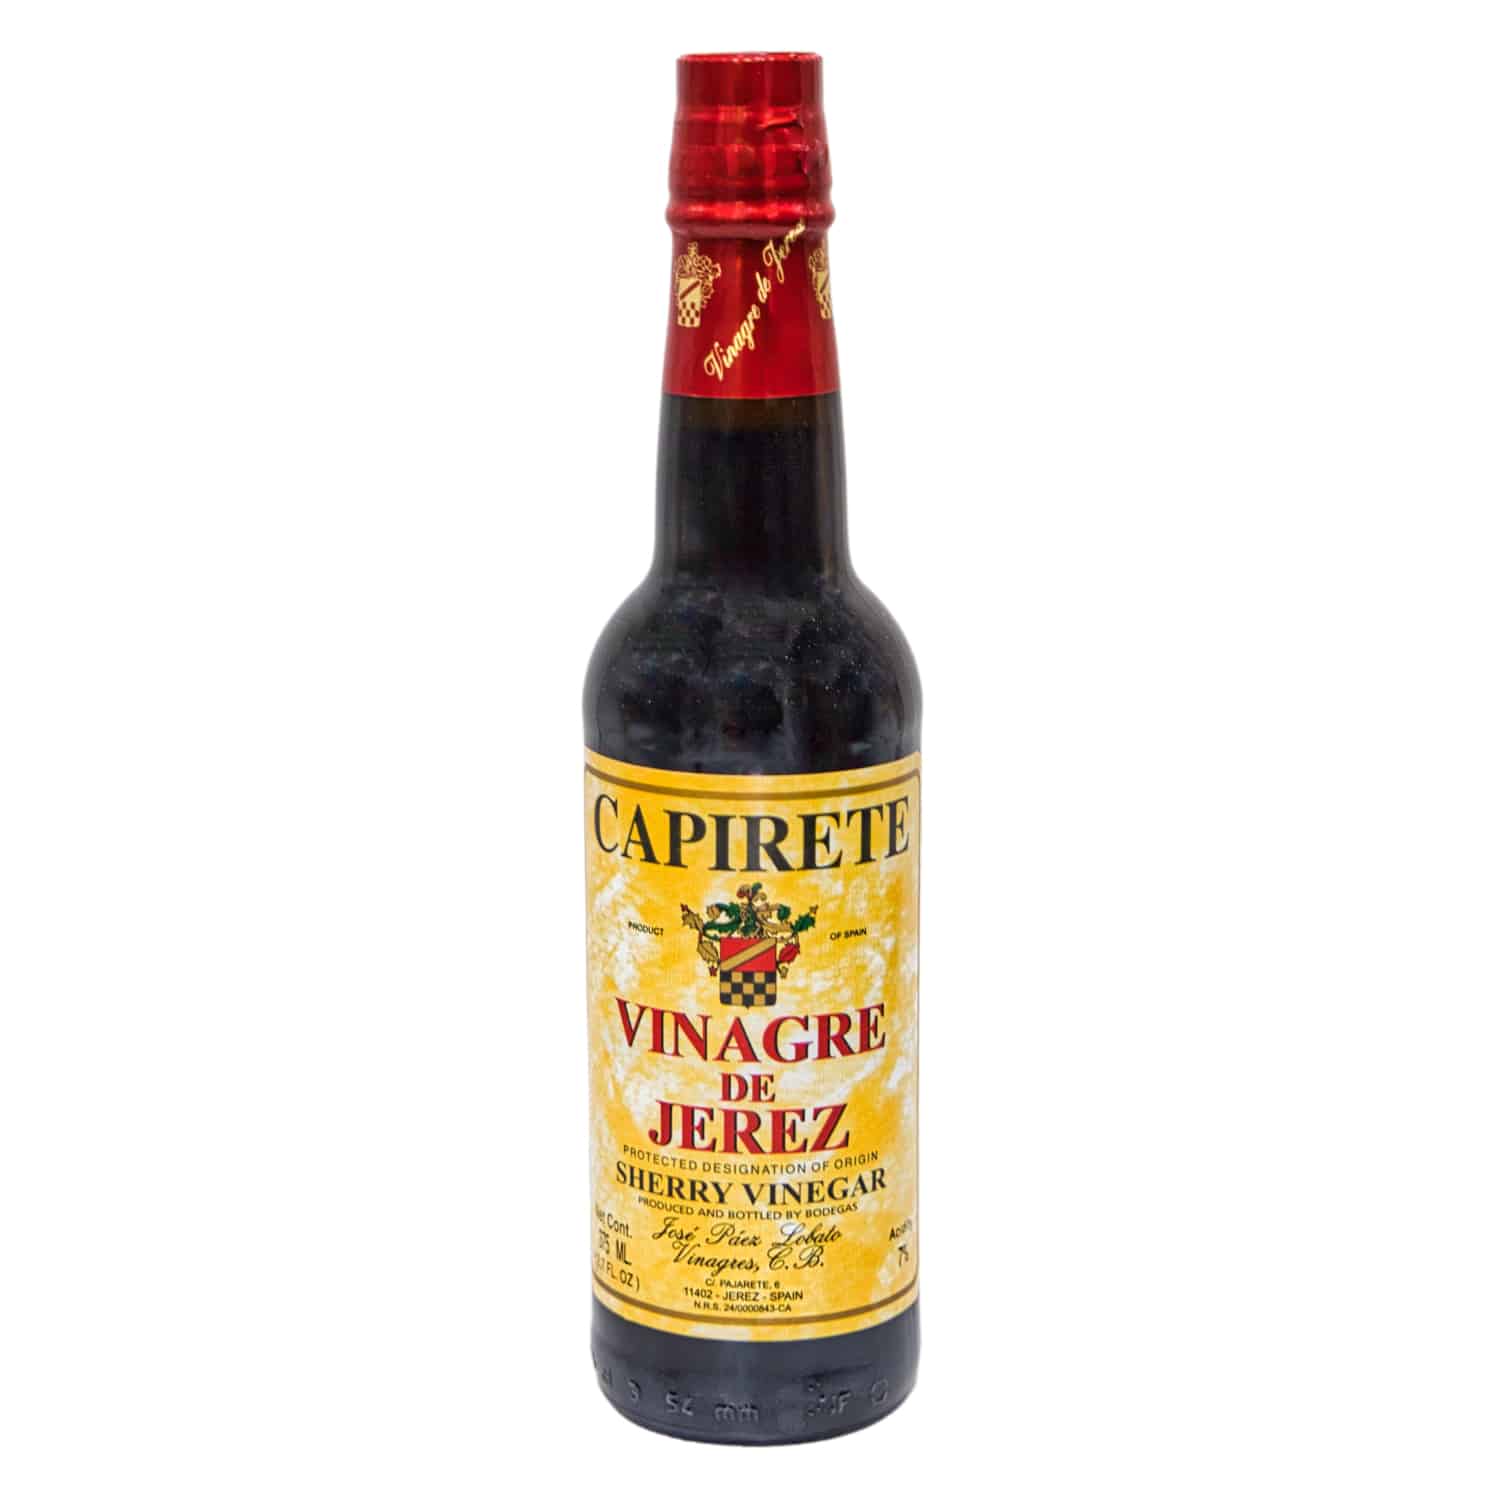 vinagre de jerez capirete sherry essig 375ml front